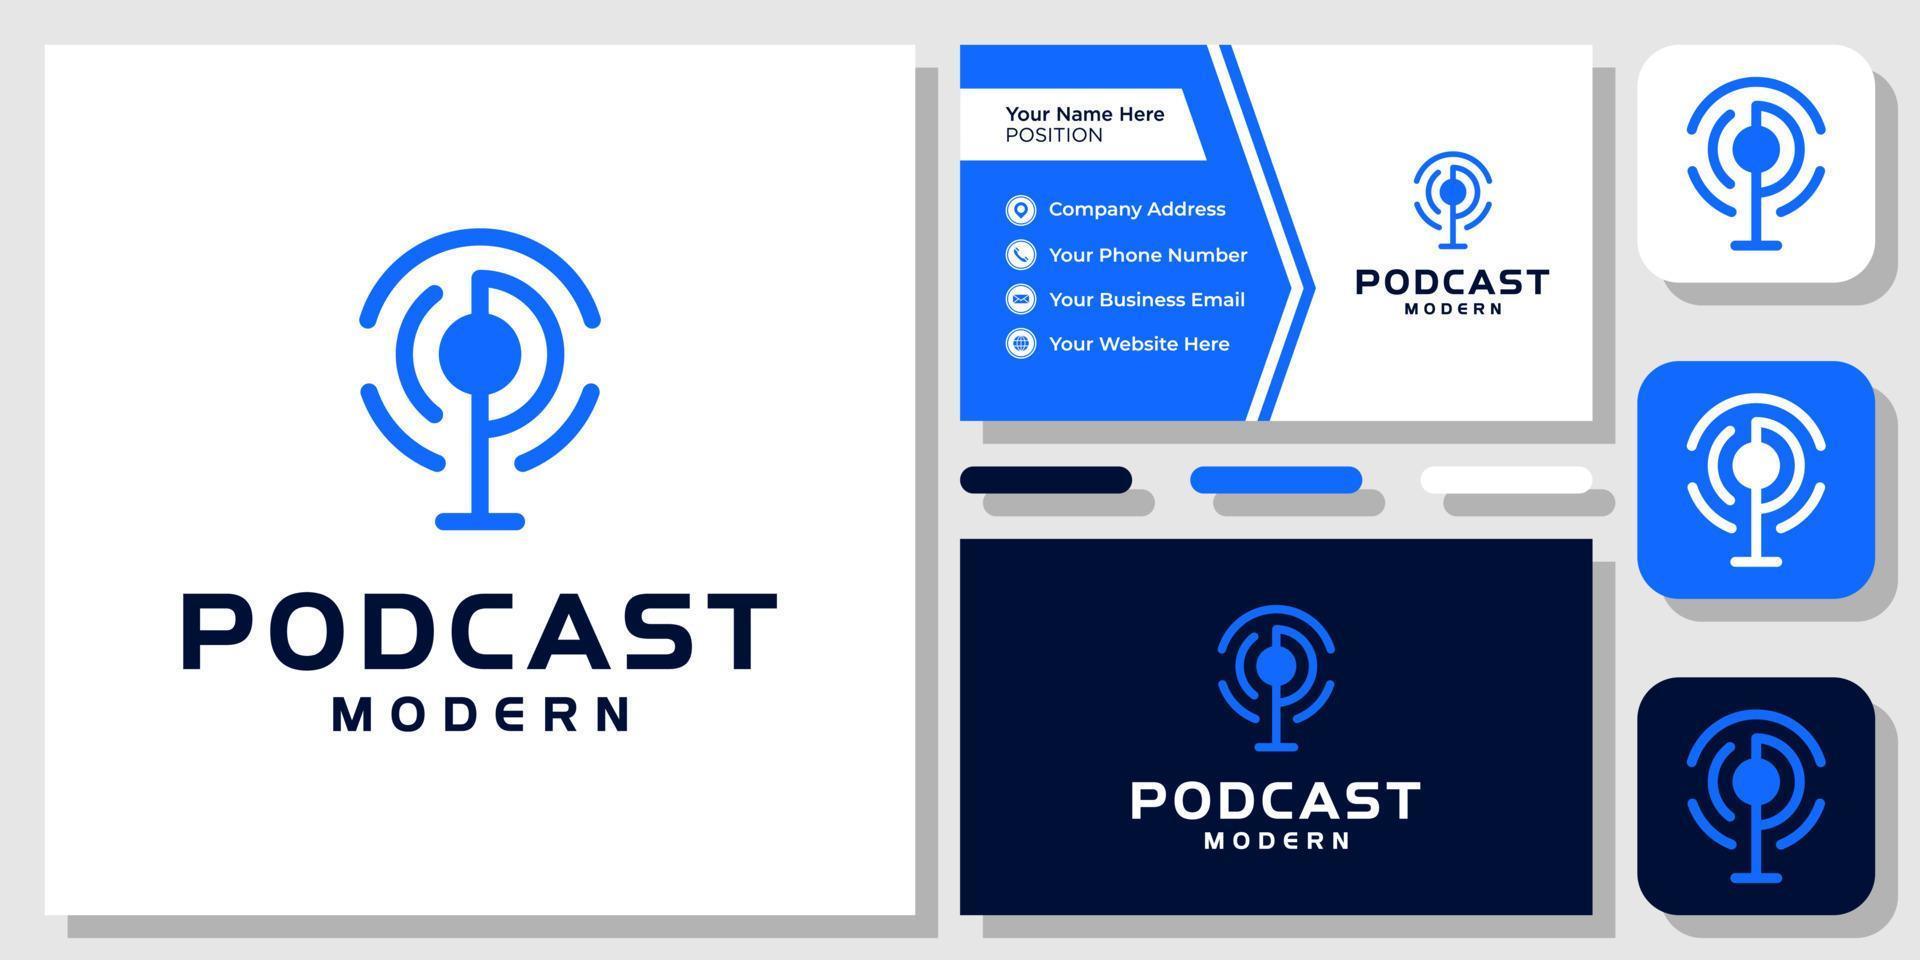 Podcast-modernes abstraktes Mikrofon-Mikrofon-Broadcast-Kreis-Symbol-Logo-Design mit Visitenkartenvorlage vektor